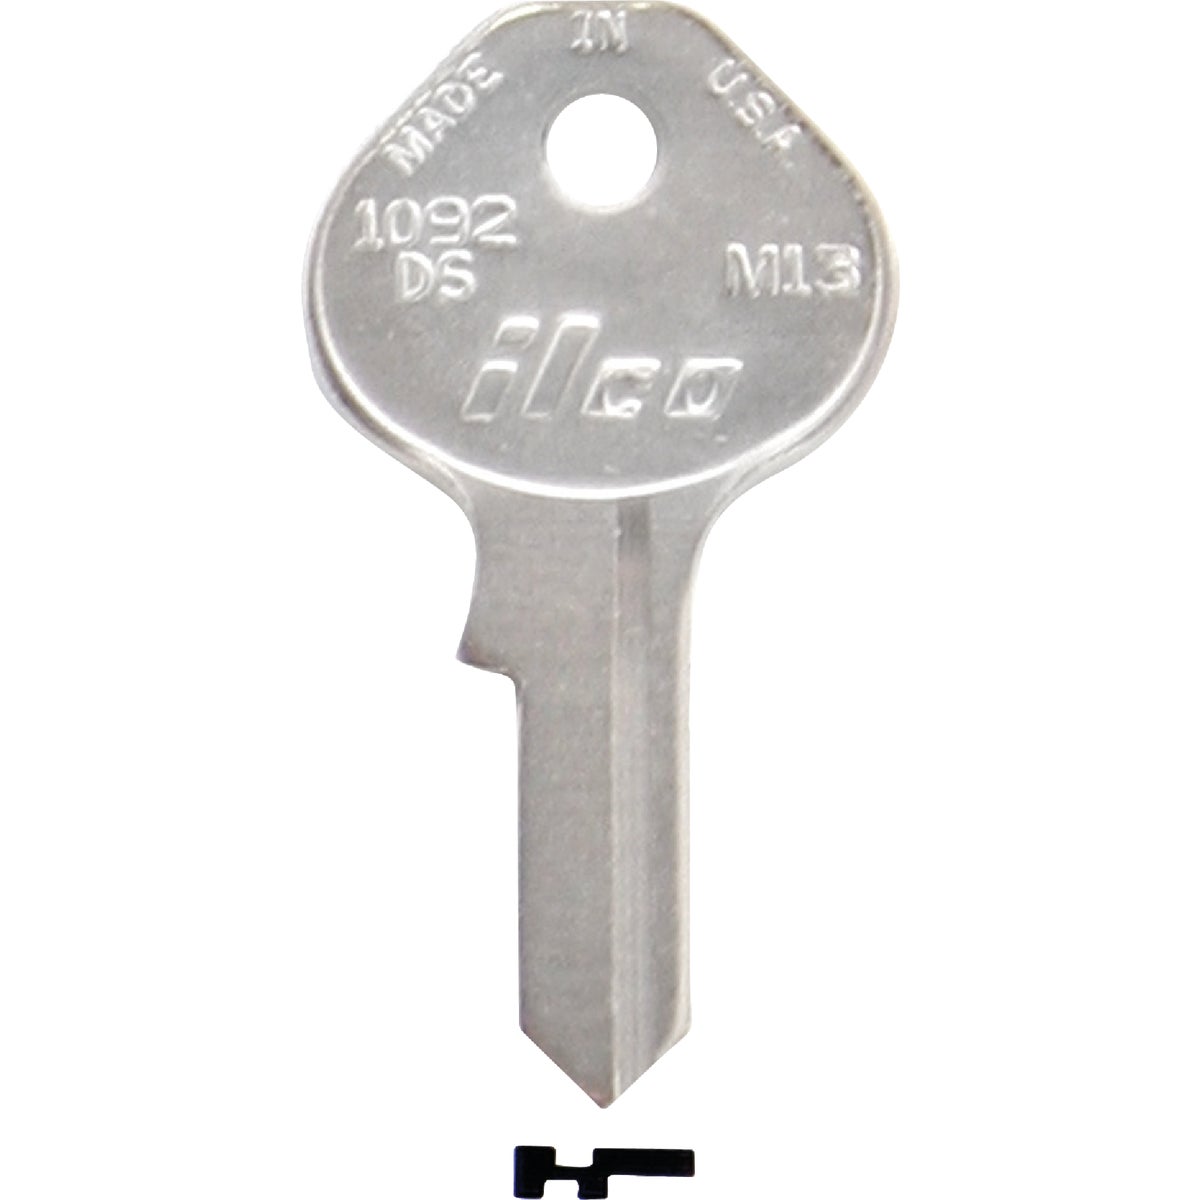 ILCO Master Nickel Plated Padlock Key M13 / 1092DS (10-Pack)